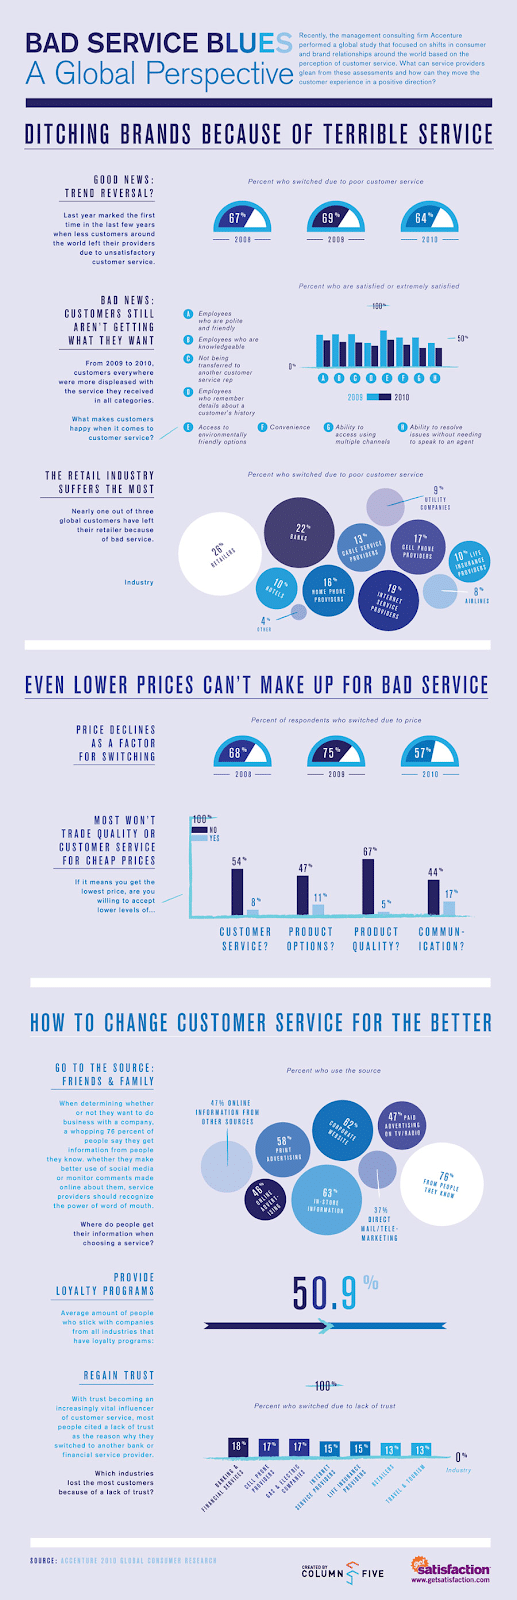 customer service infographic